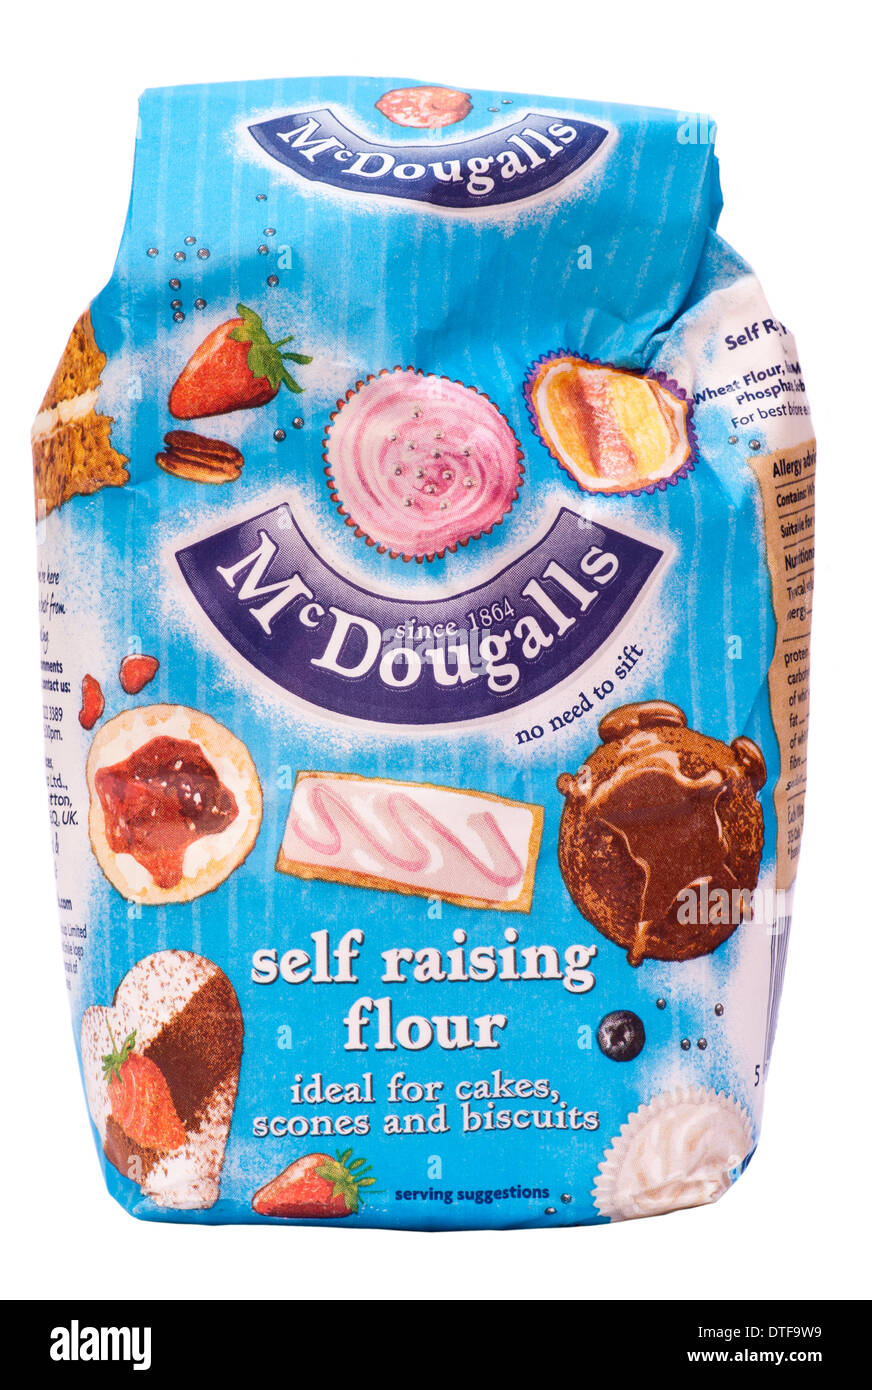 McDougalls Self Raising Flour Stock Photo